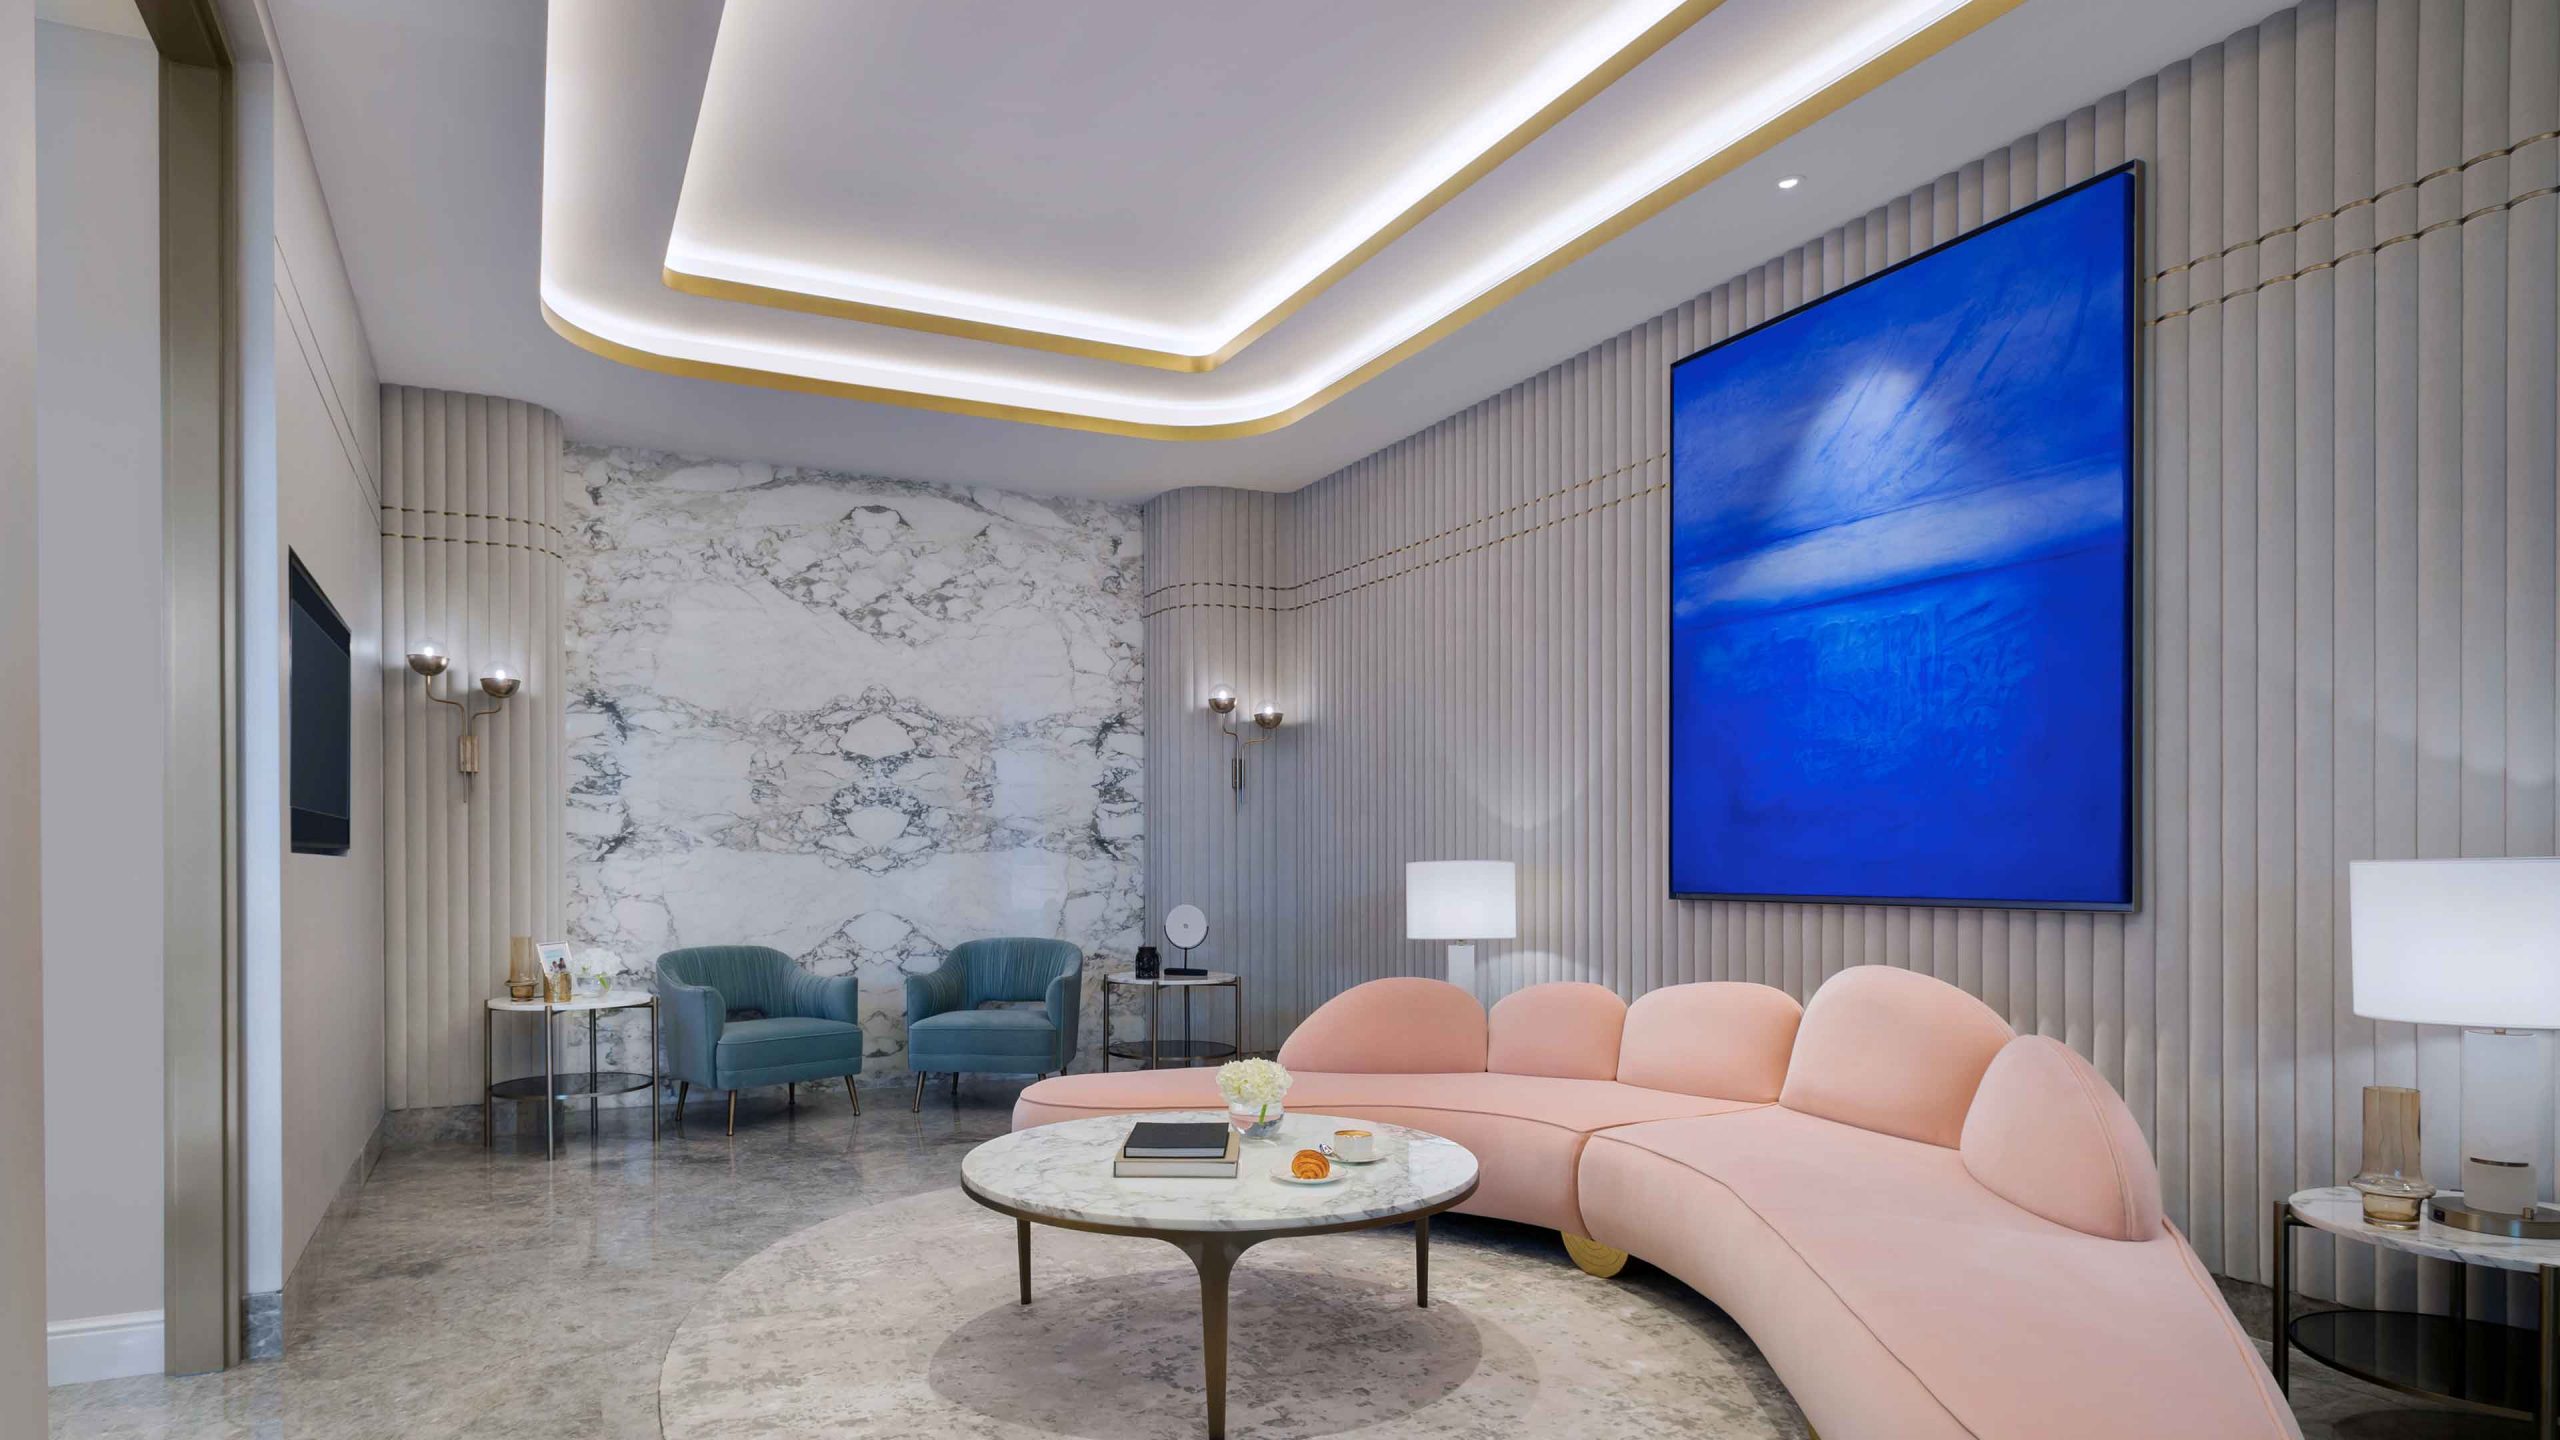 Architectural Lighting Design Dubai Airport T3 Arrivals Lounge VIP Lounge Feature Coffer Illumination Studio N